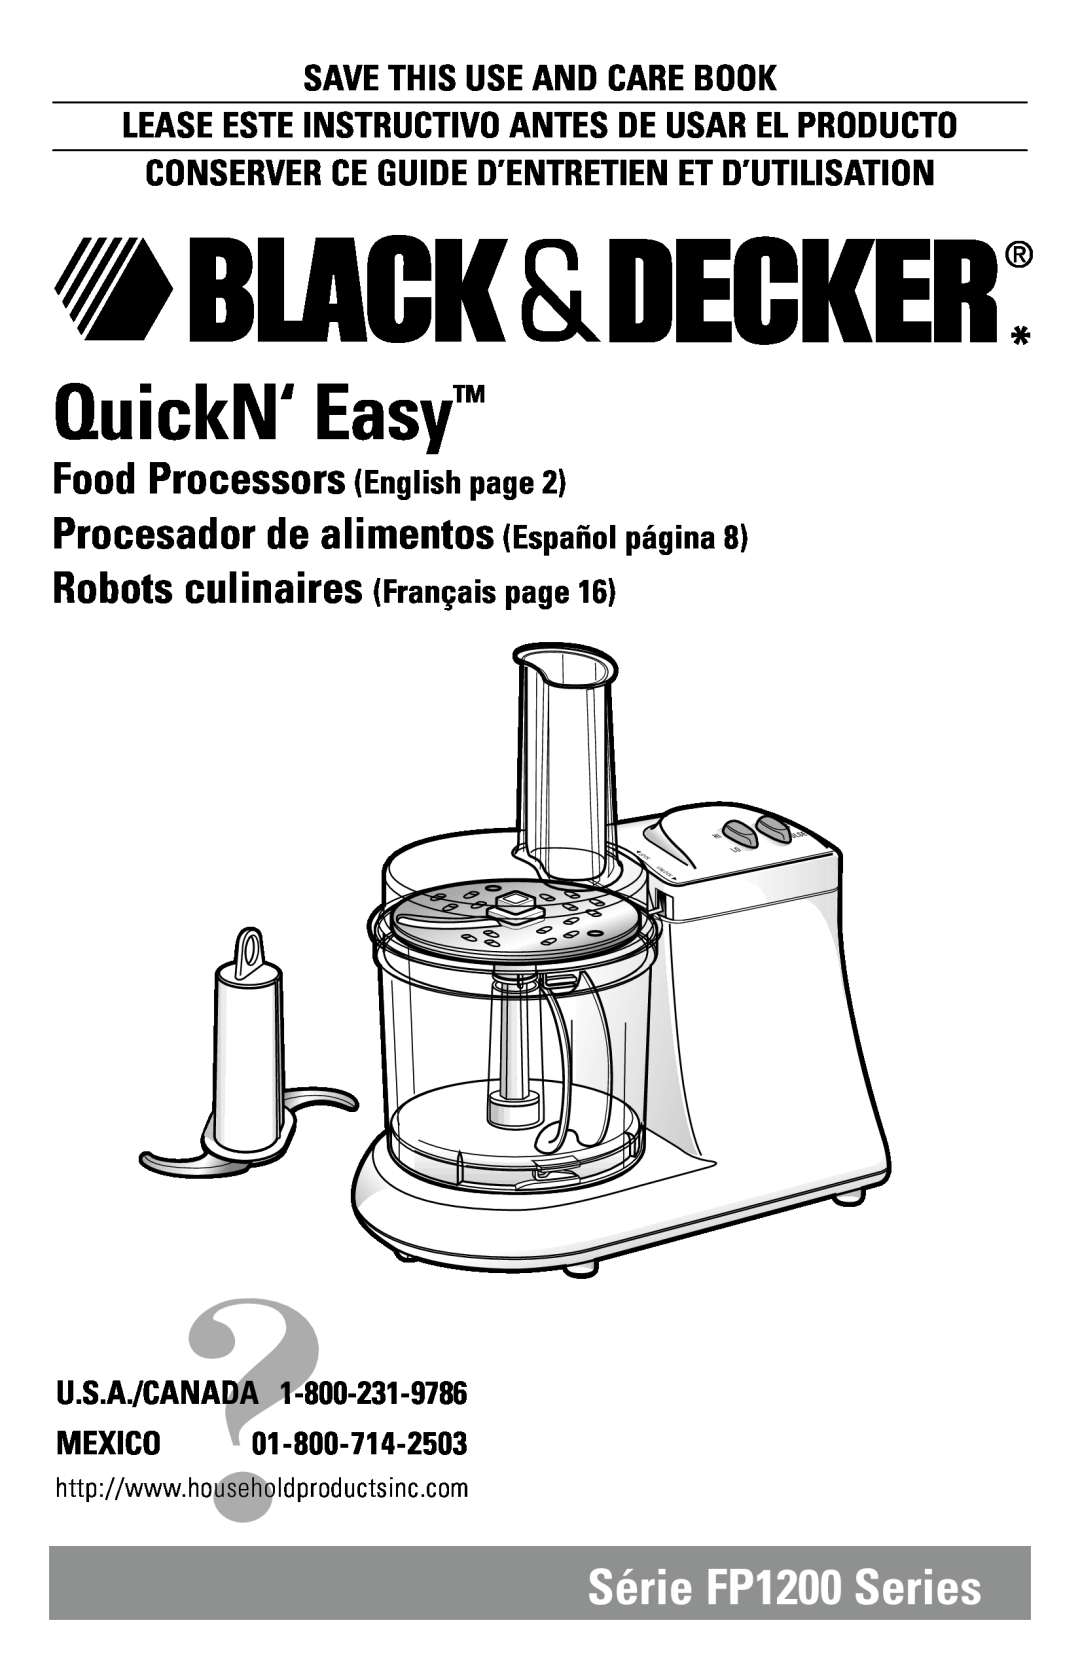 Black & Decker manual Série FP1200 Series, U.S.A./CANADA?1-800-231-9786 MEXICO, QuickN‘ Easy, Lock U Nlock 